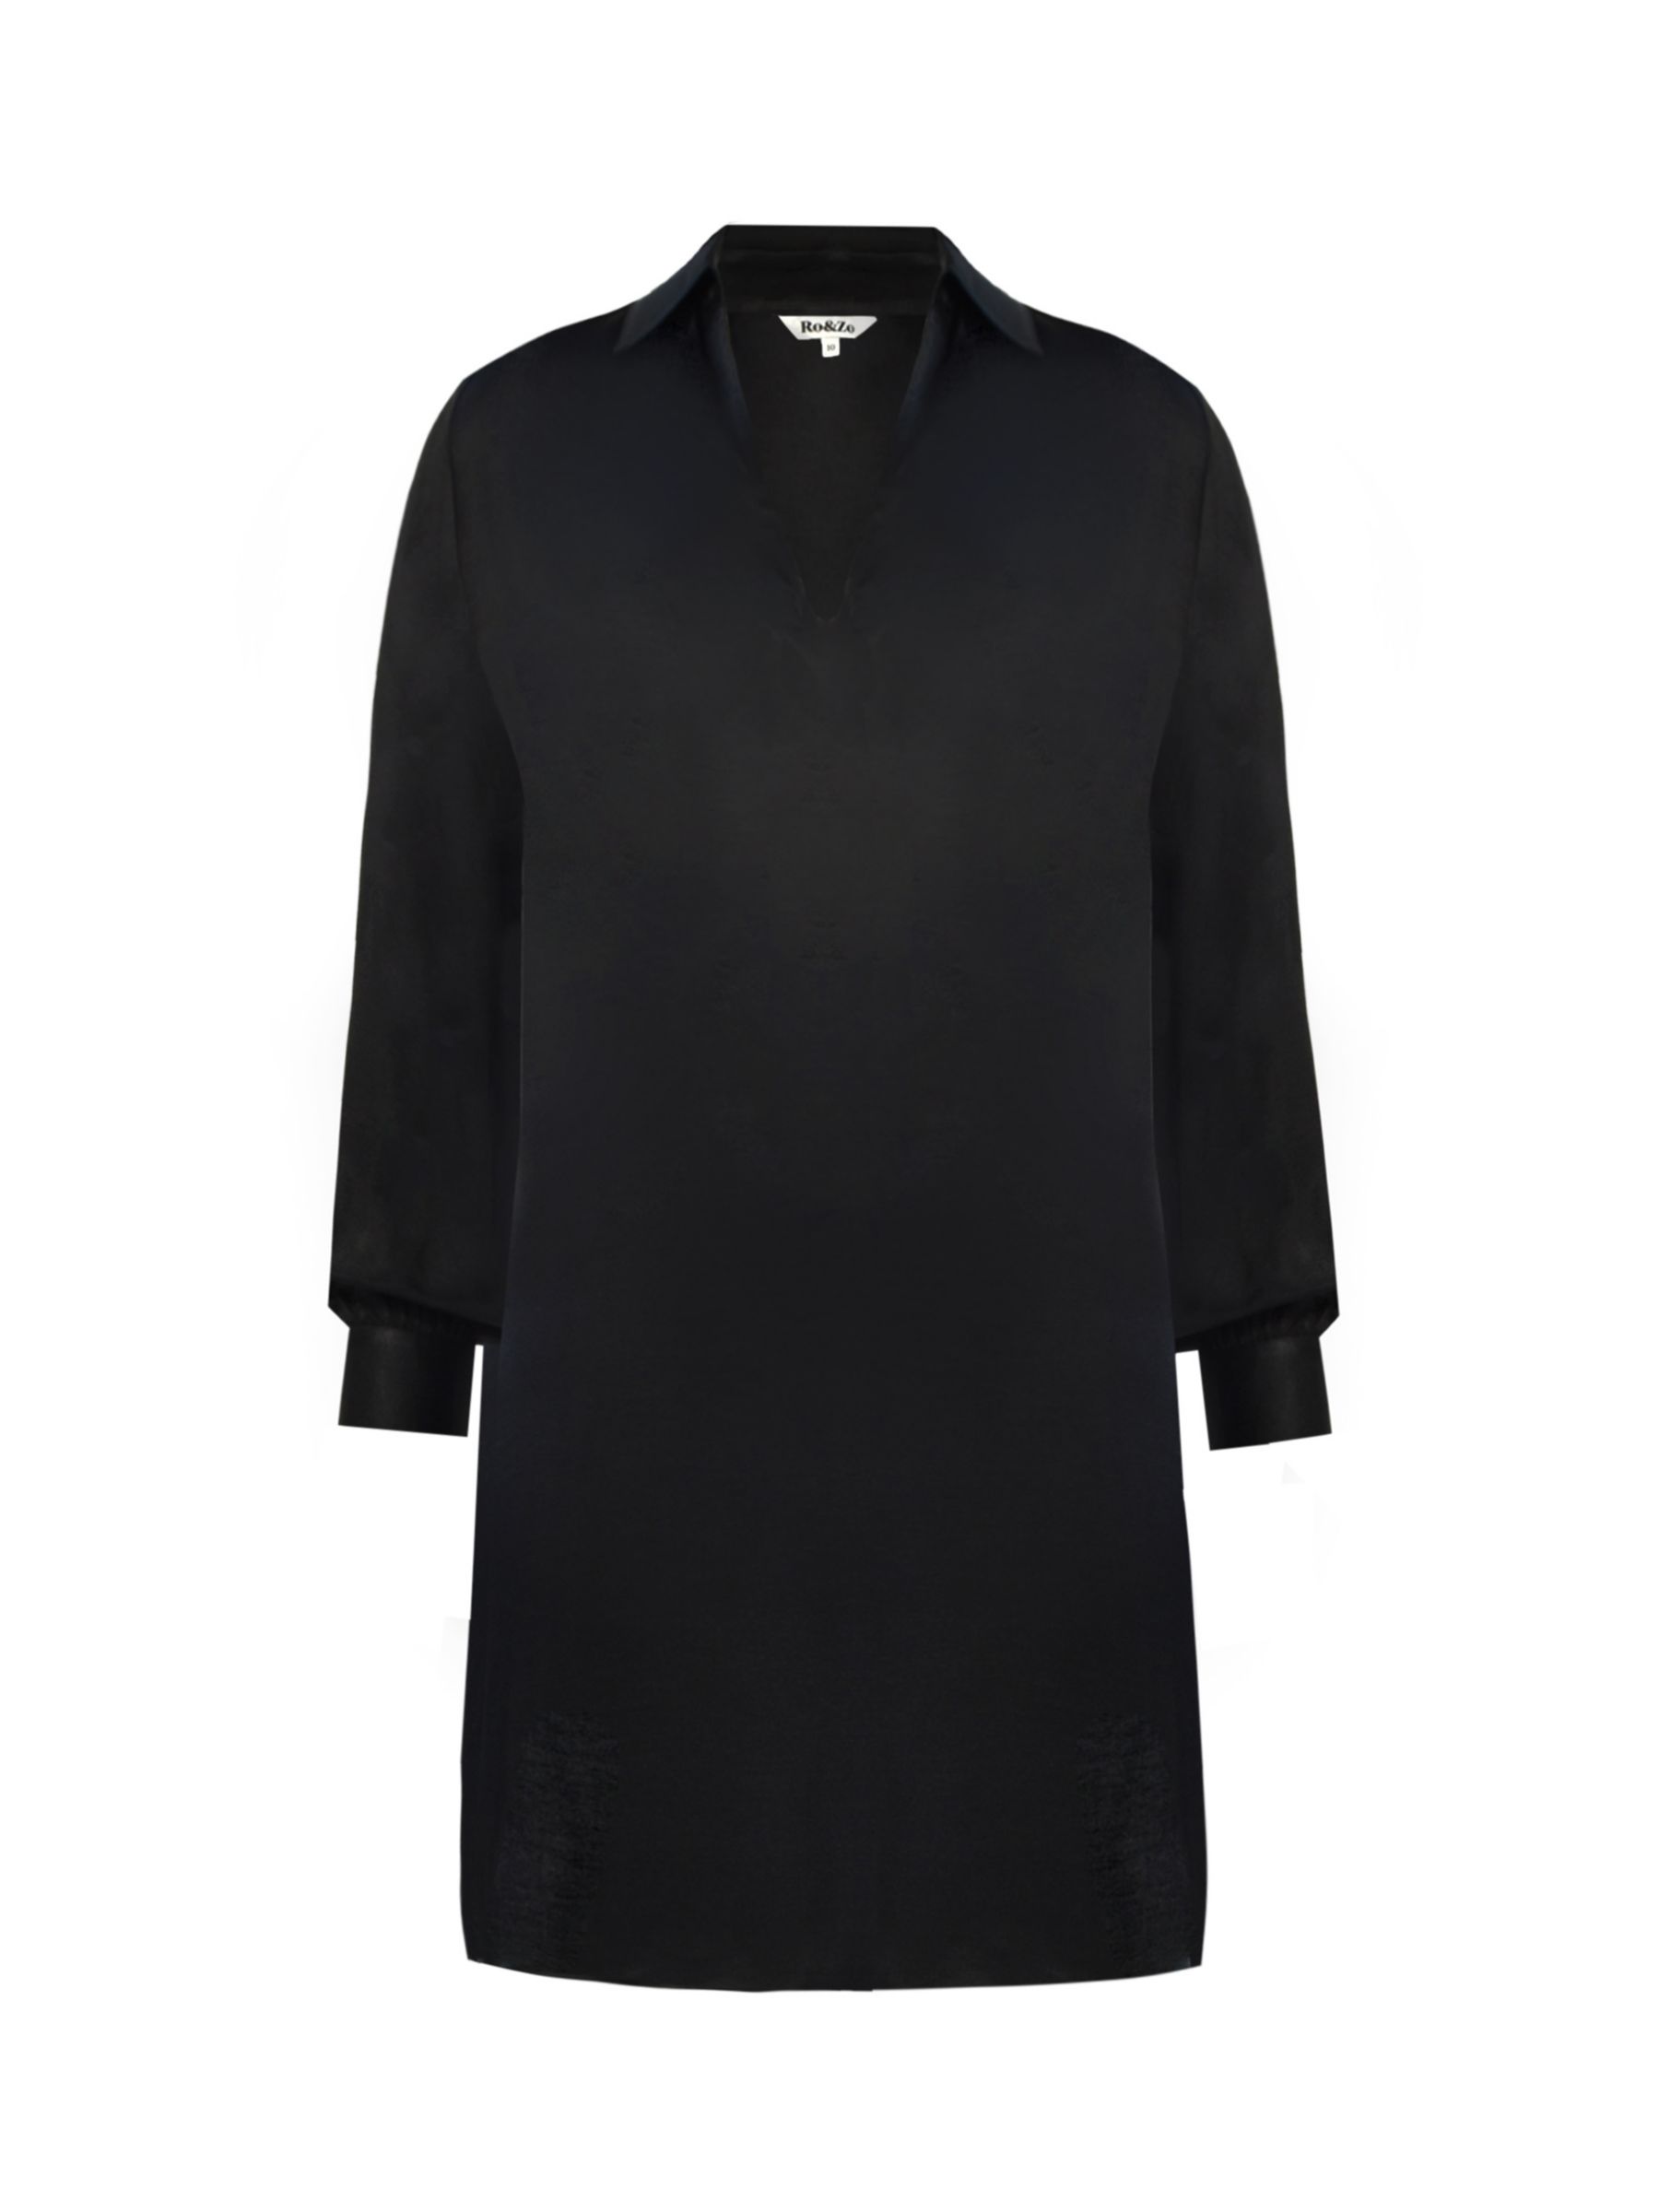 Ro&Zo Collar Detail Mini Dress, Black at John Lewis & Partners